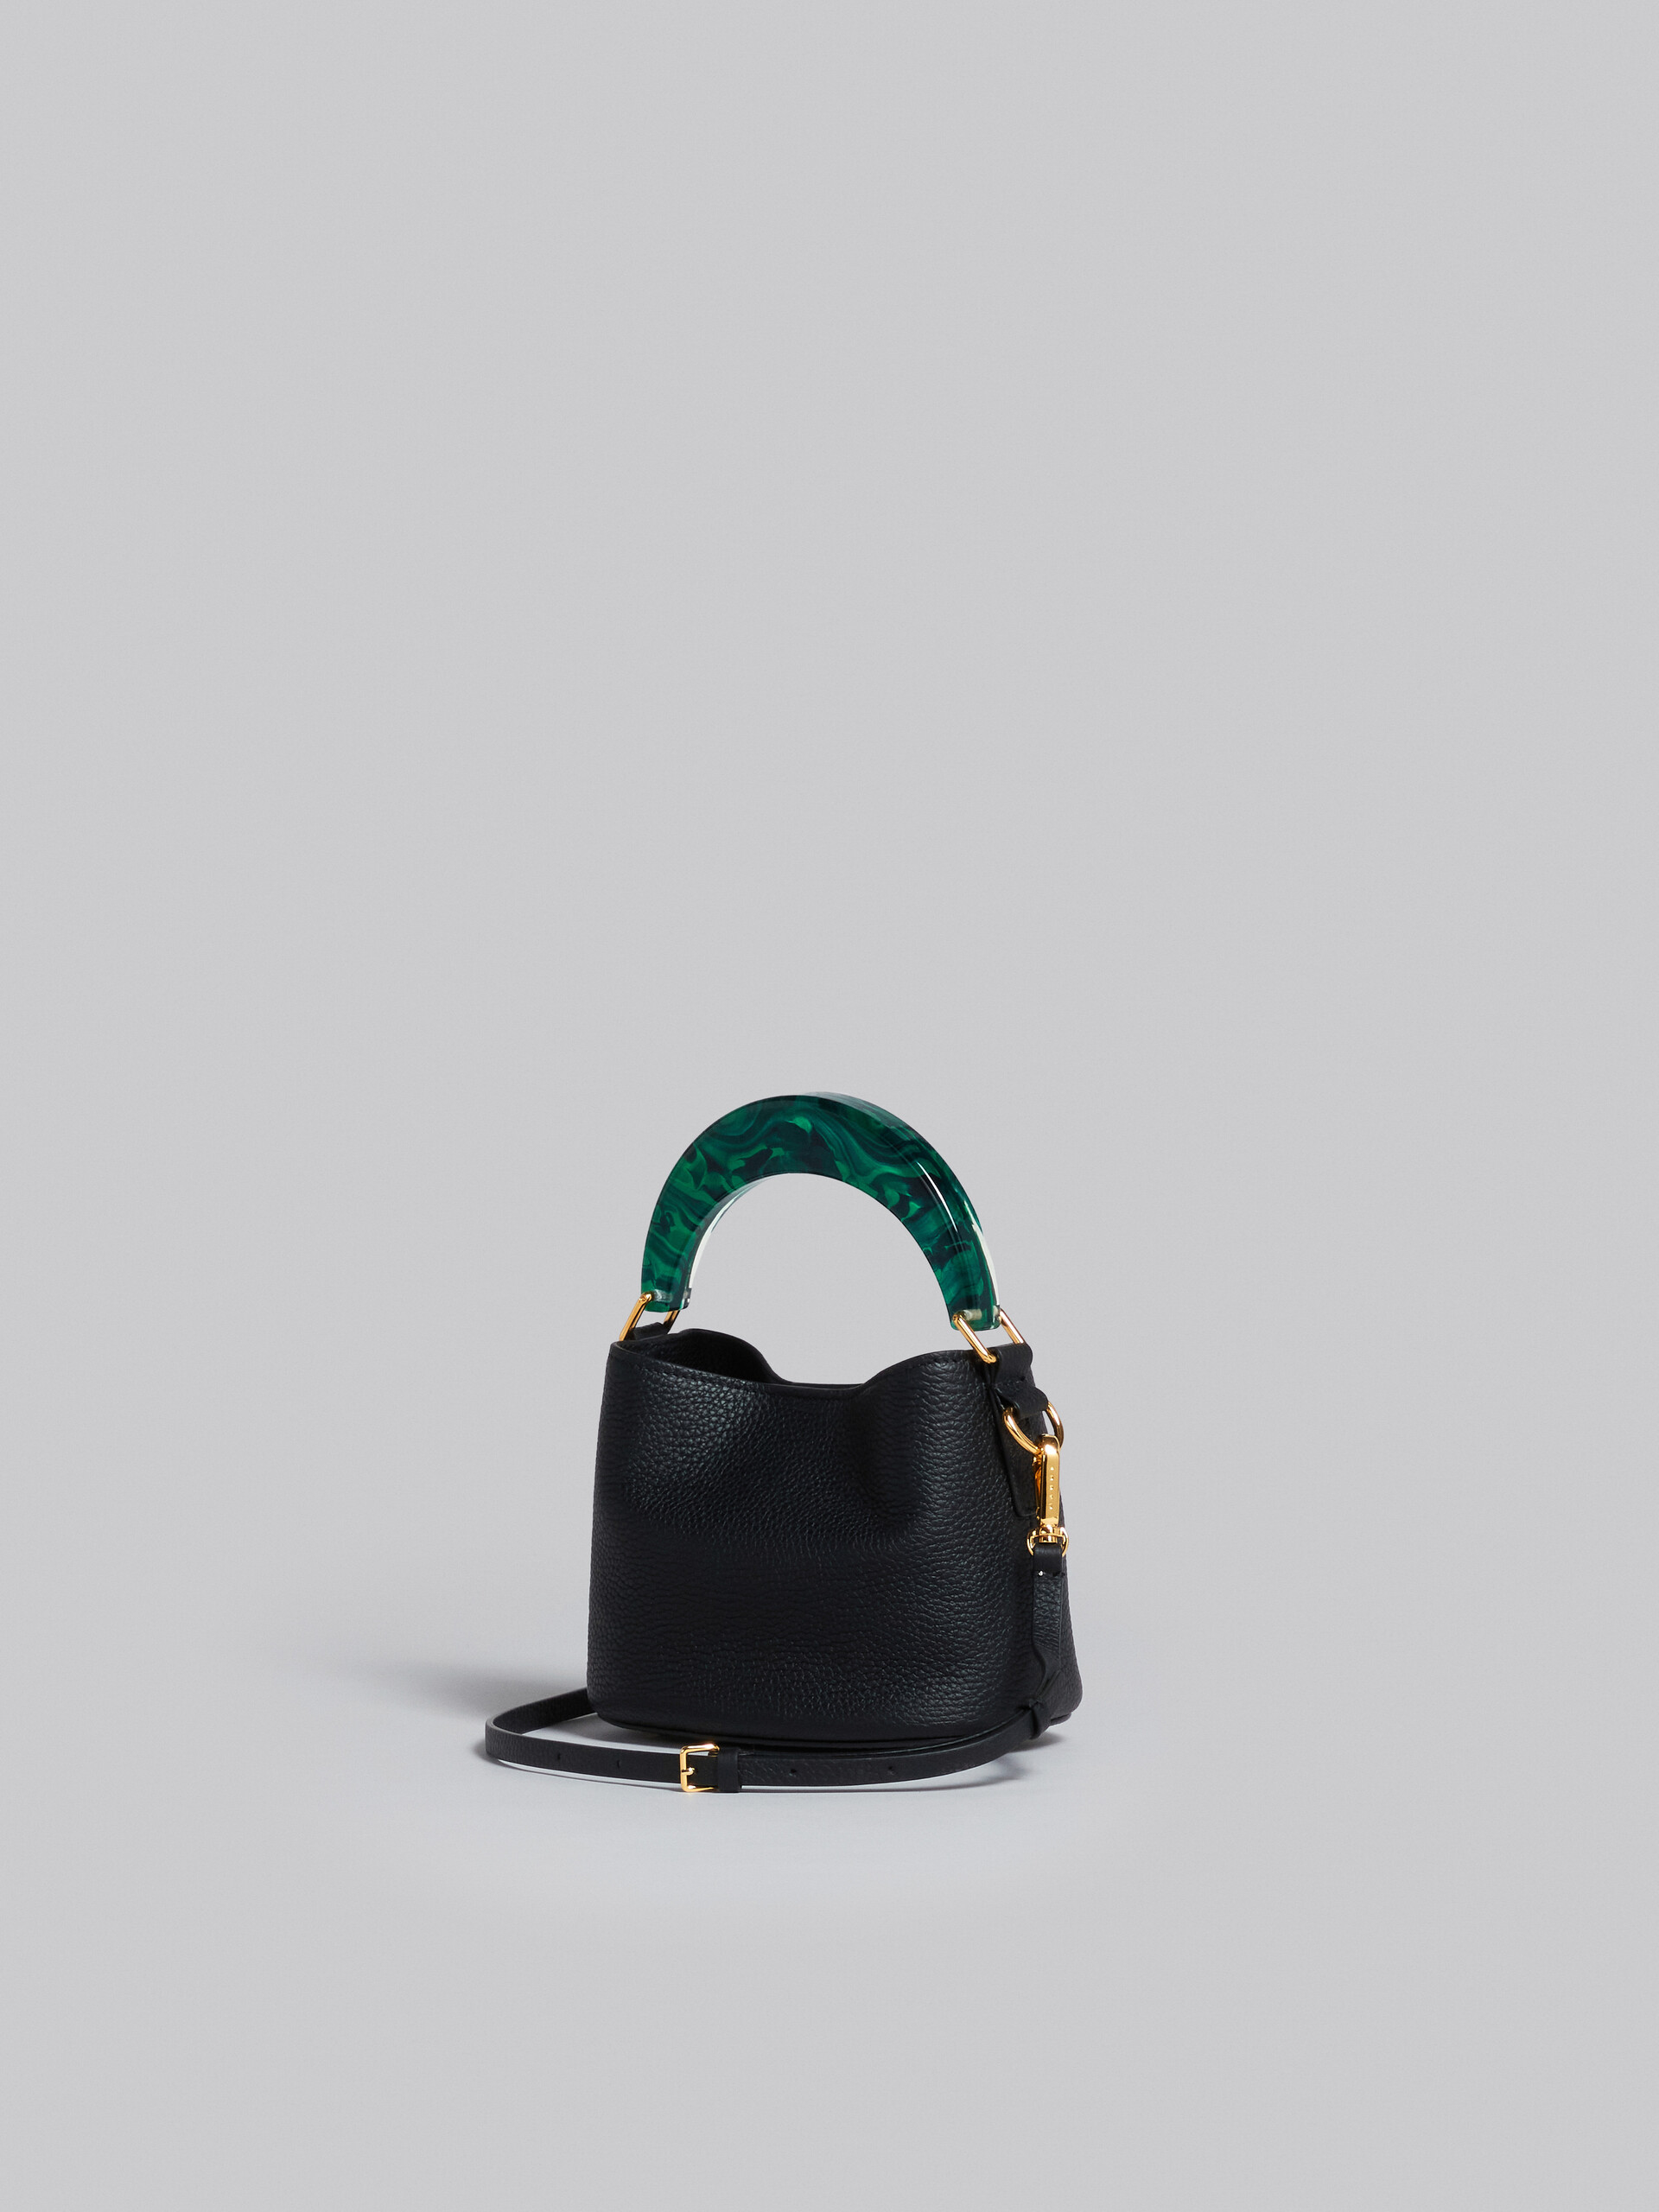 Marni 'Venice' Mini Bucket Bag